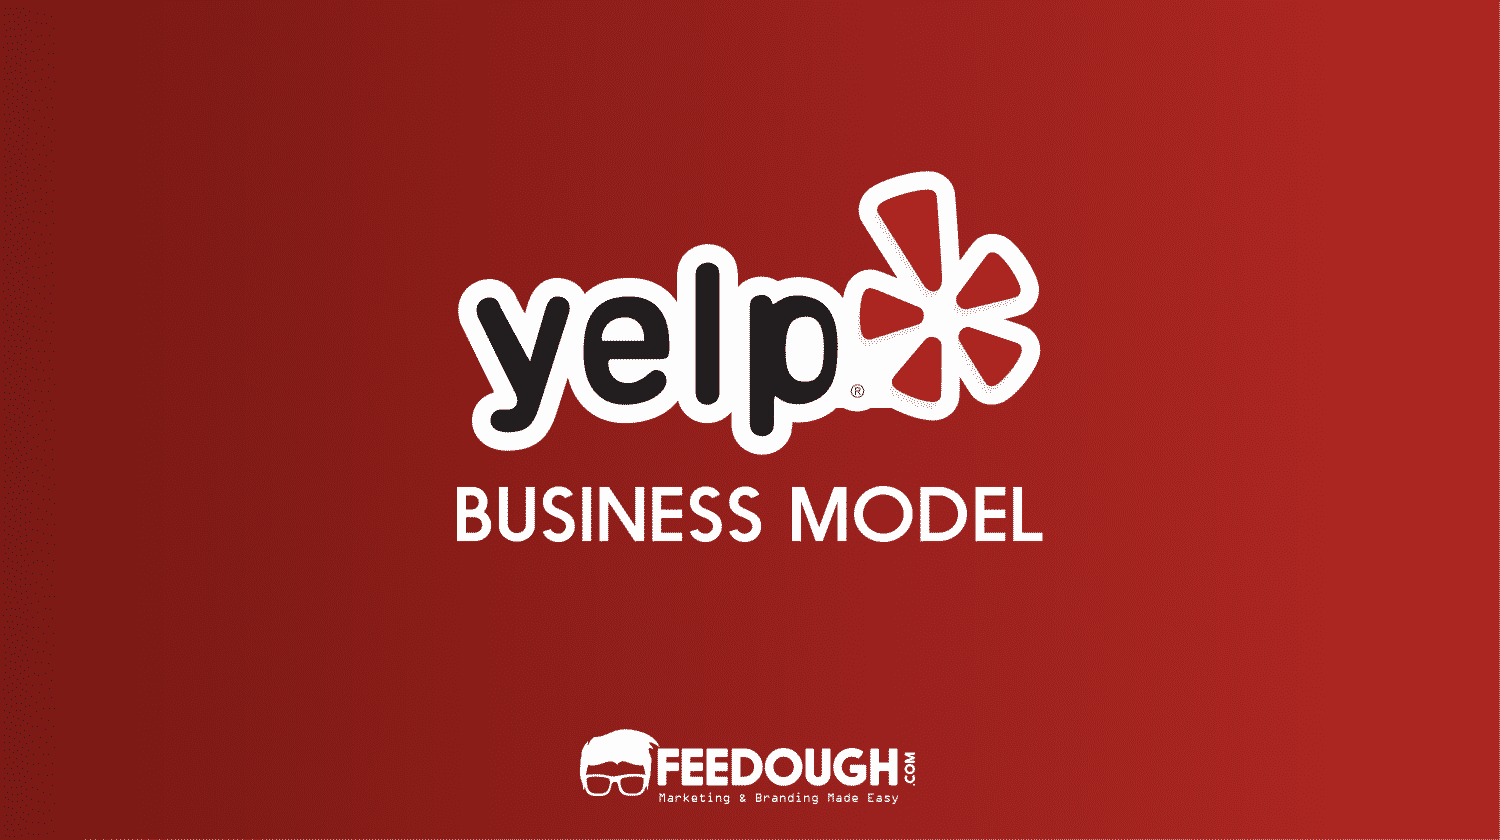 Yelp Business Model | How Does Yelp Make Money? | Feedough